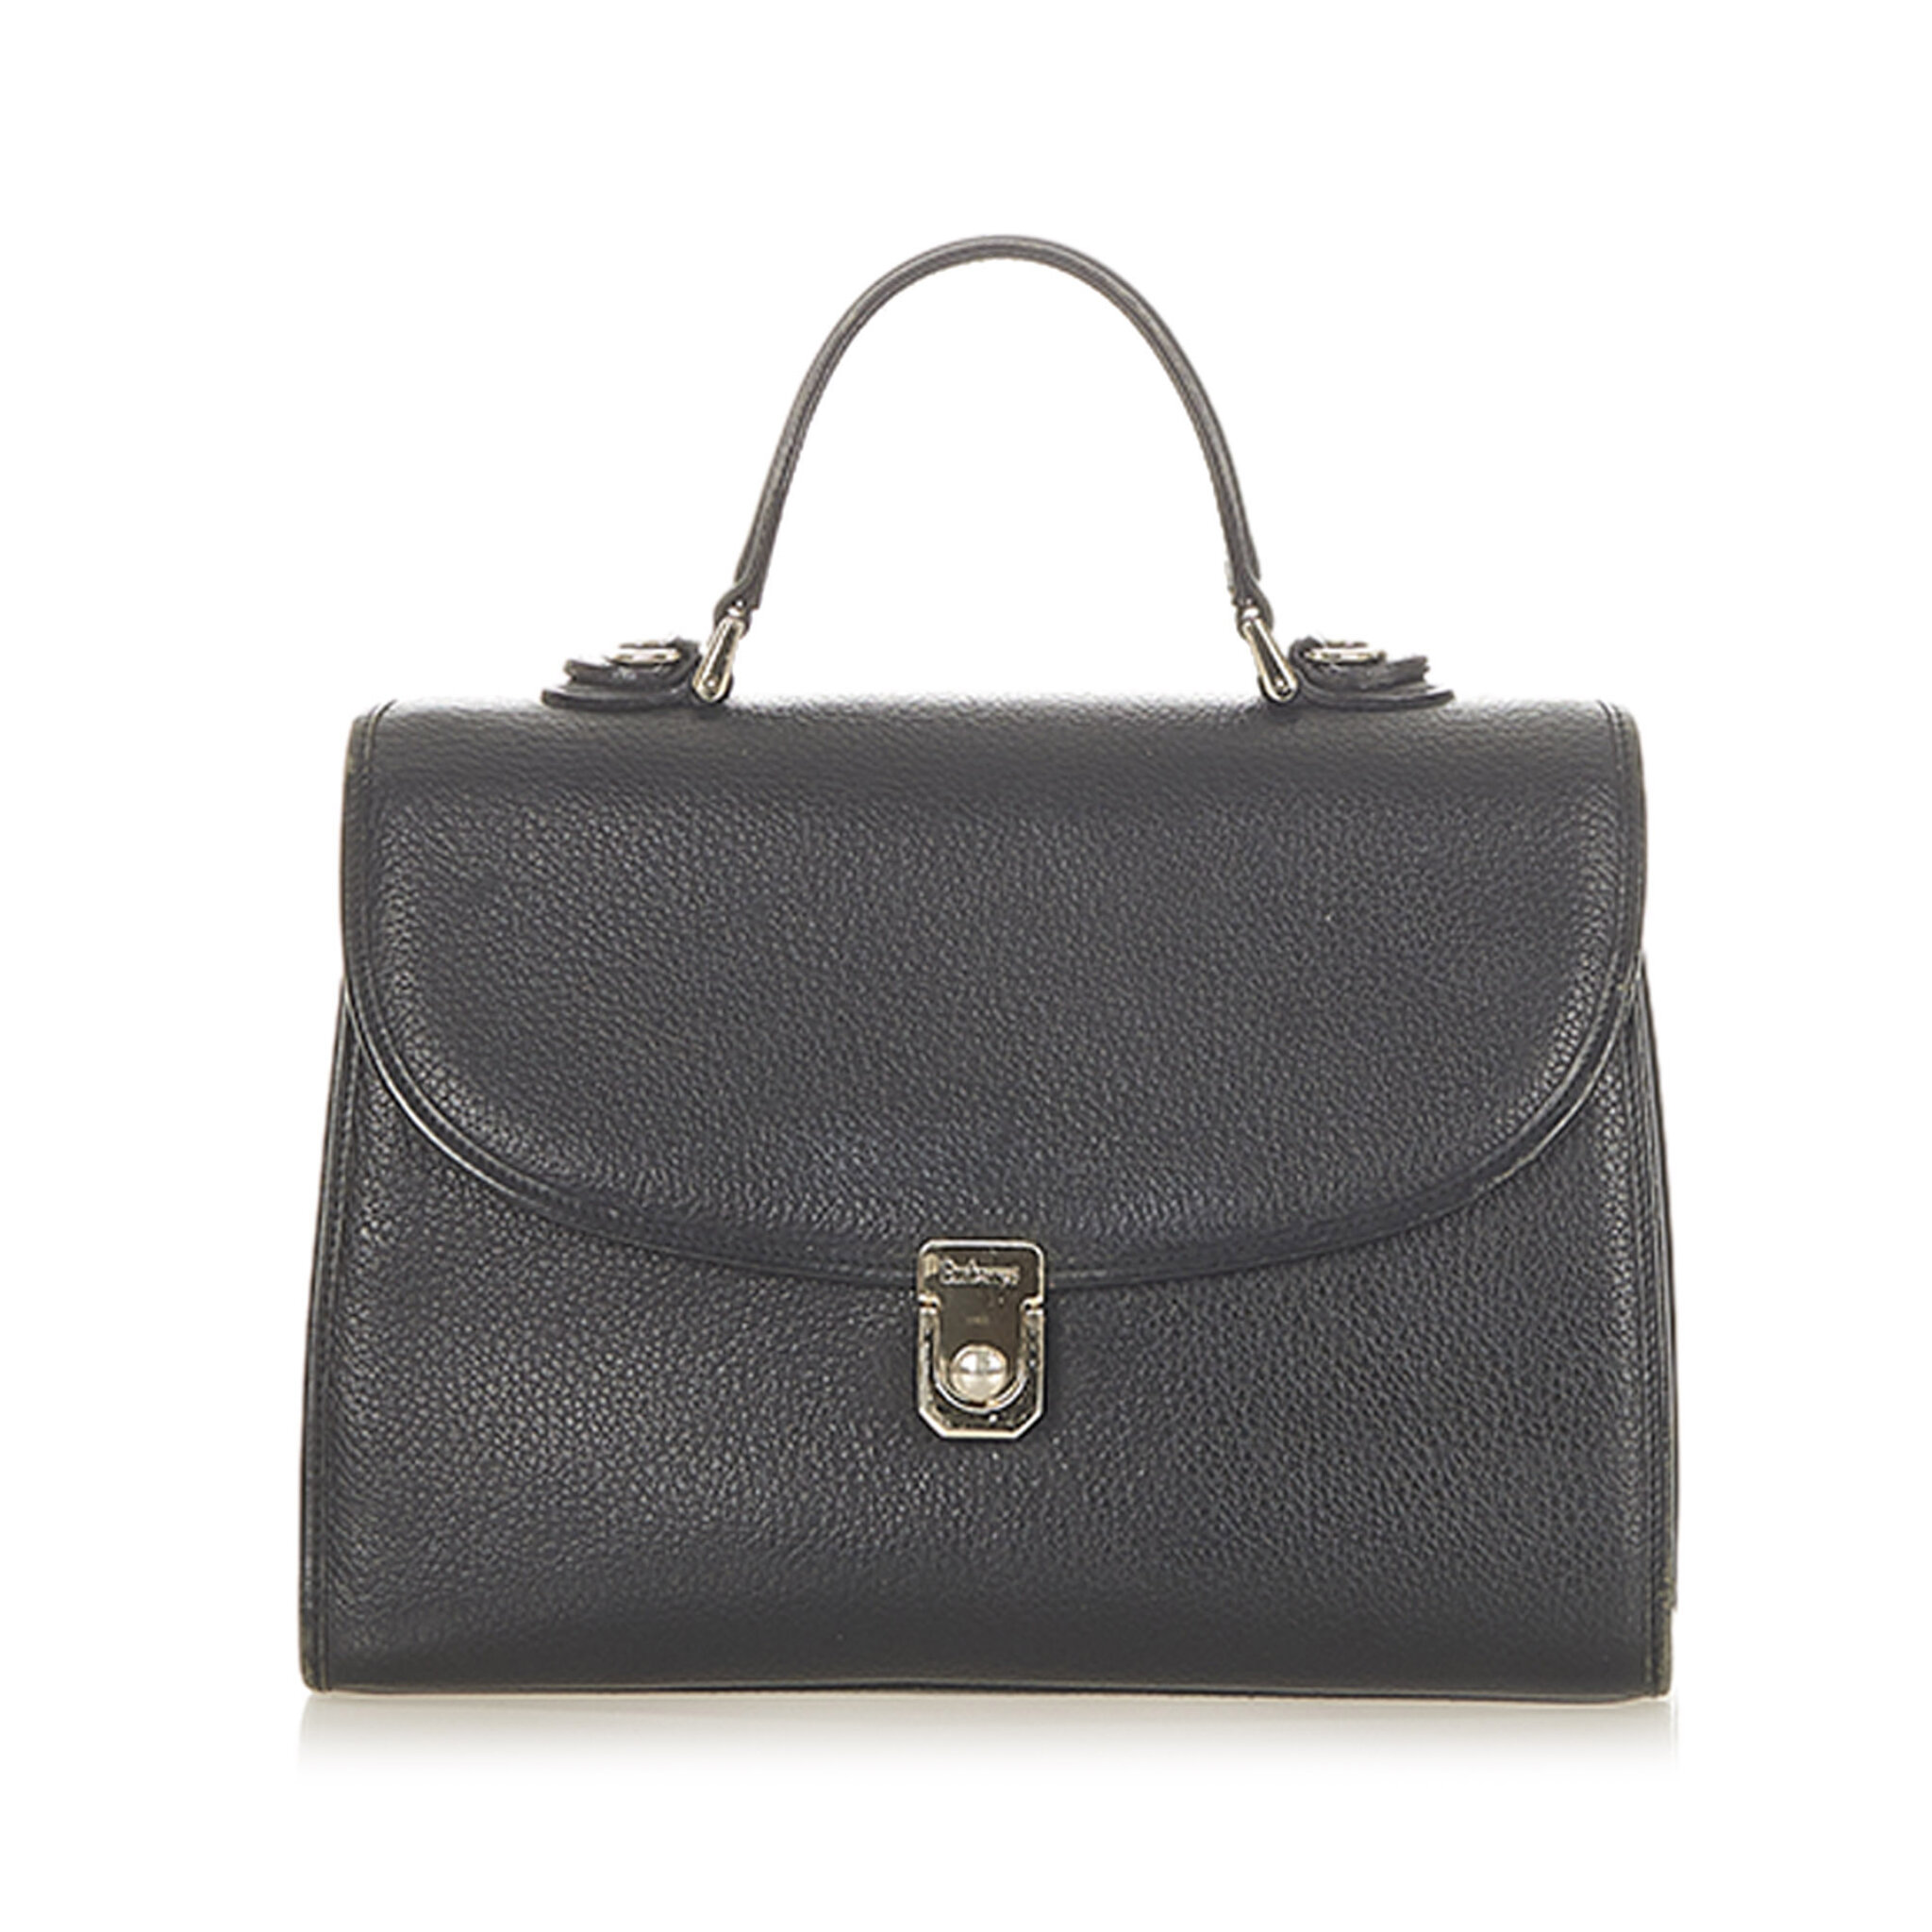 Burberry Leather Handbag, black